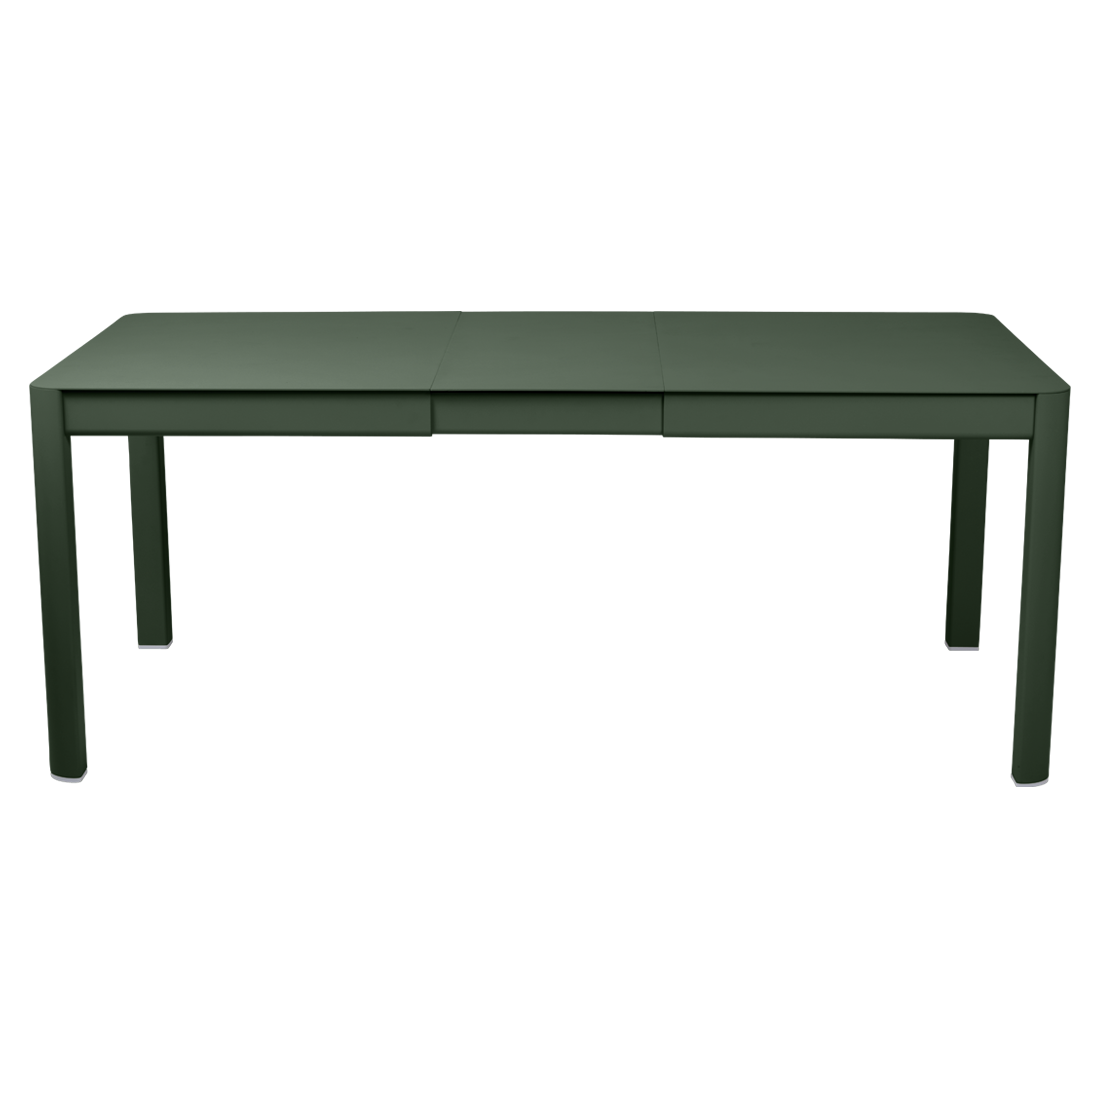 table de jardin verte, table metal allonge, table metal a rallonge, table metal rectangulaire, table fermob allonge